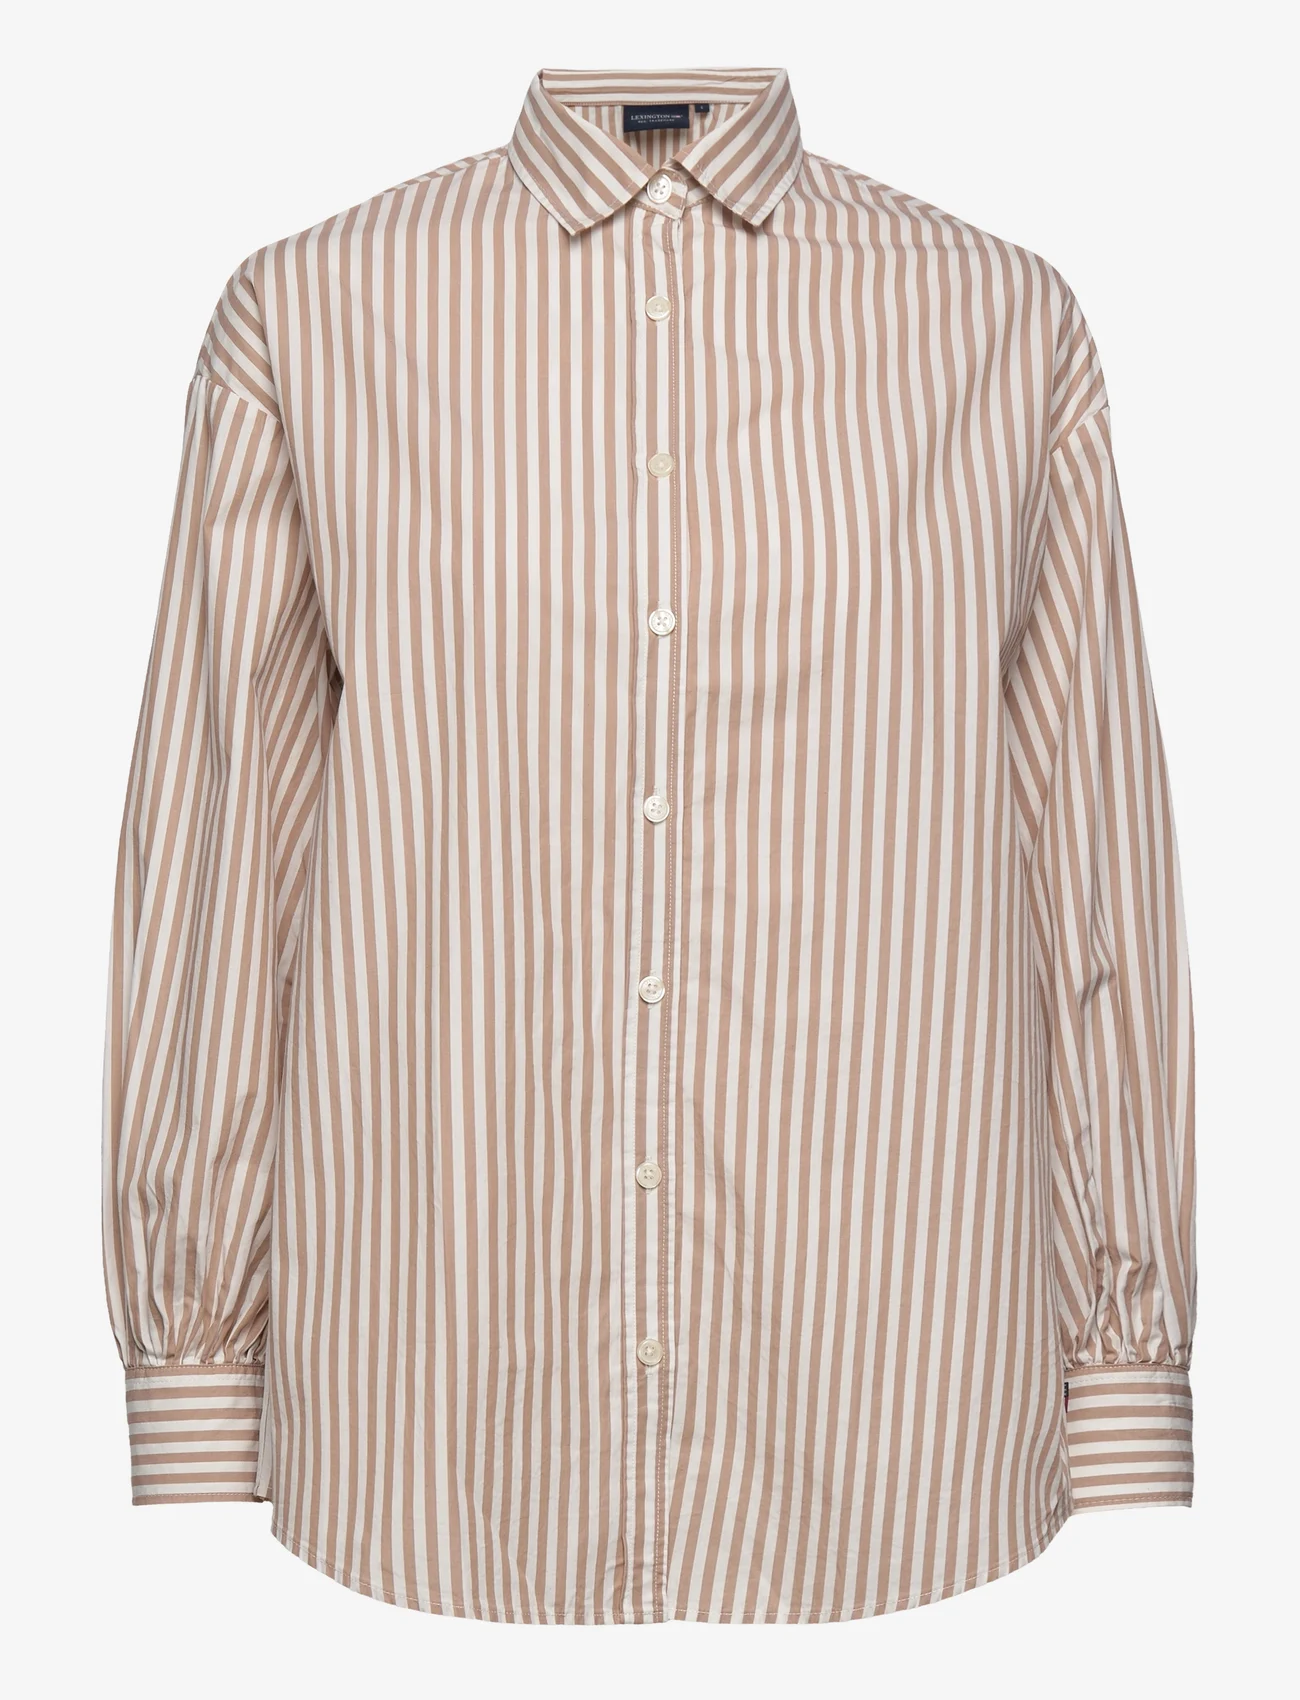 Lexington Clothing - Daphne Organic Cotton Poplin Shirt - beige/white stripe - 0